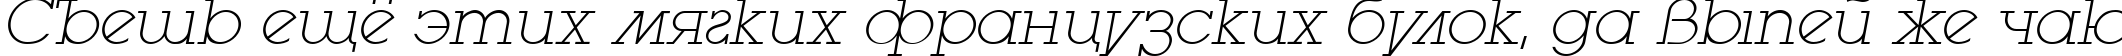 Пример написания шрифтом LugaExtraAd ExtraLight Oblique текста на русском